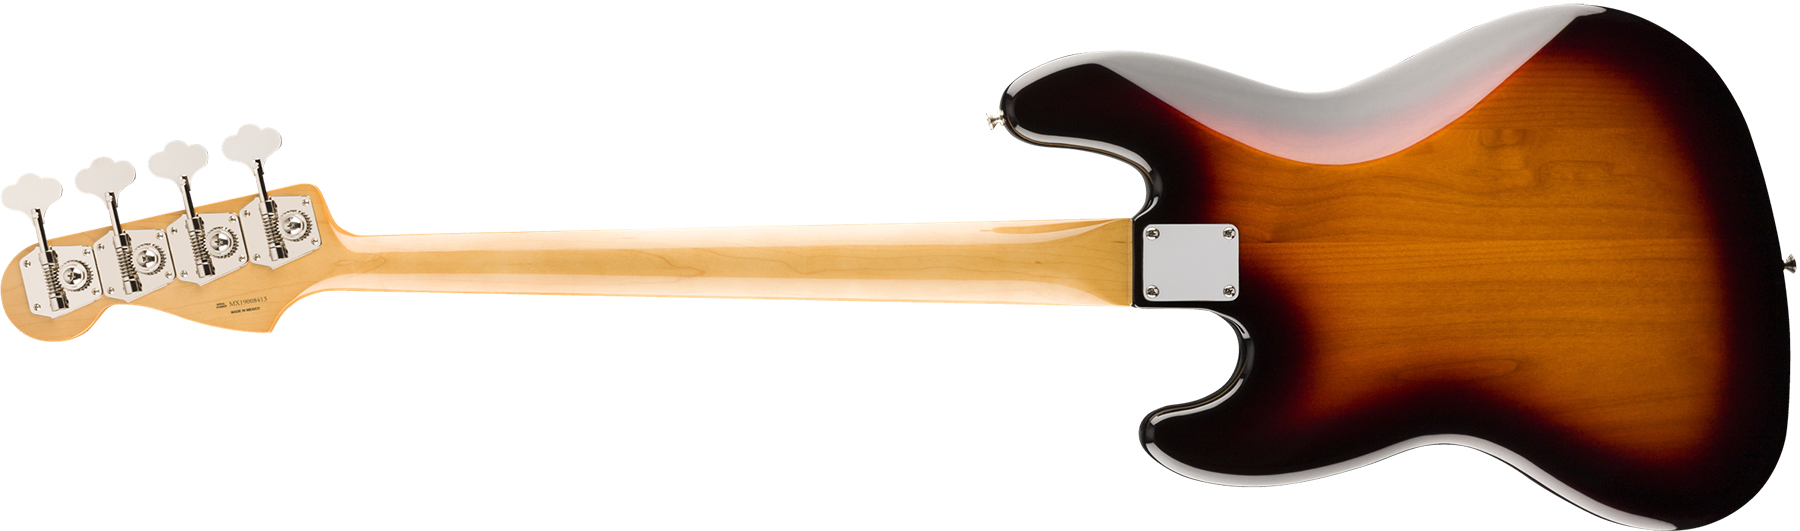 Fender Jazz Bass 60s Vintera Vintage Mex Pf - 3-color Sunburst - Solid body electric bass - Variation 1